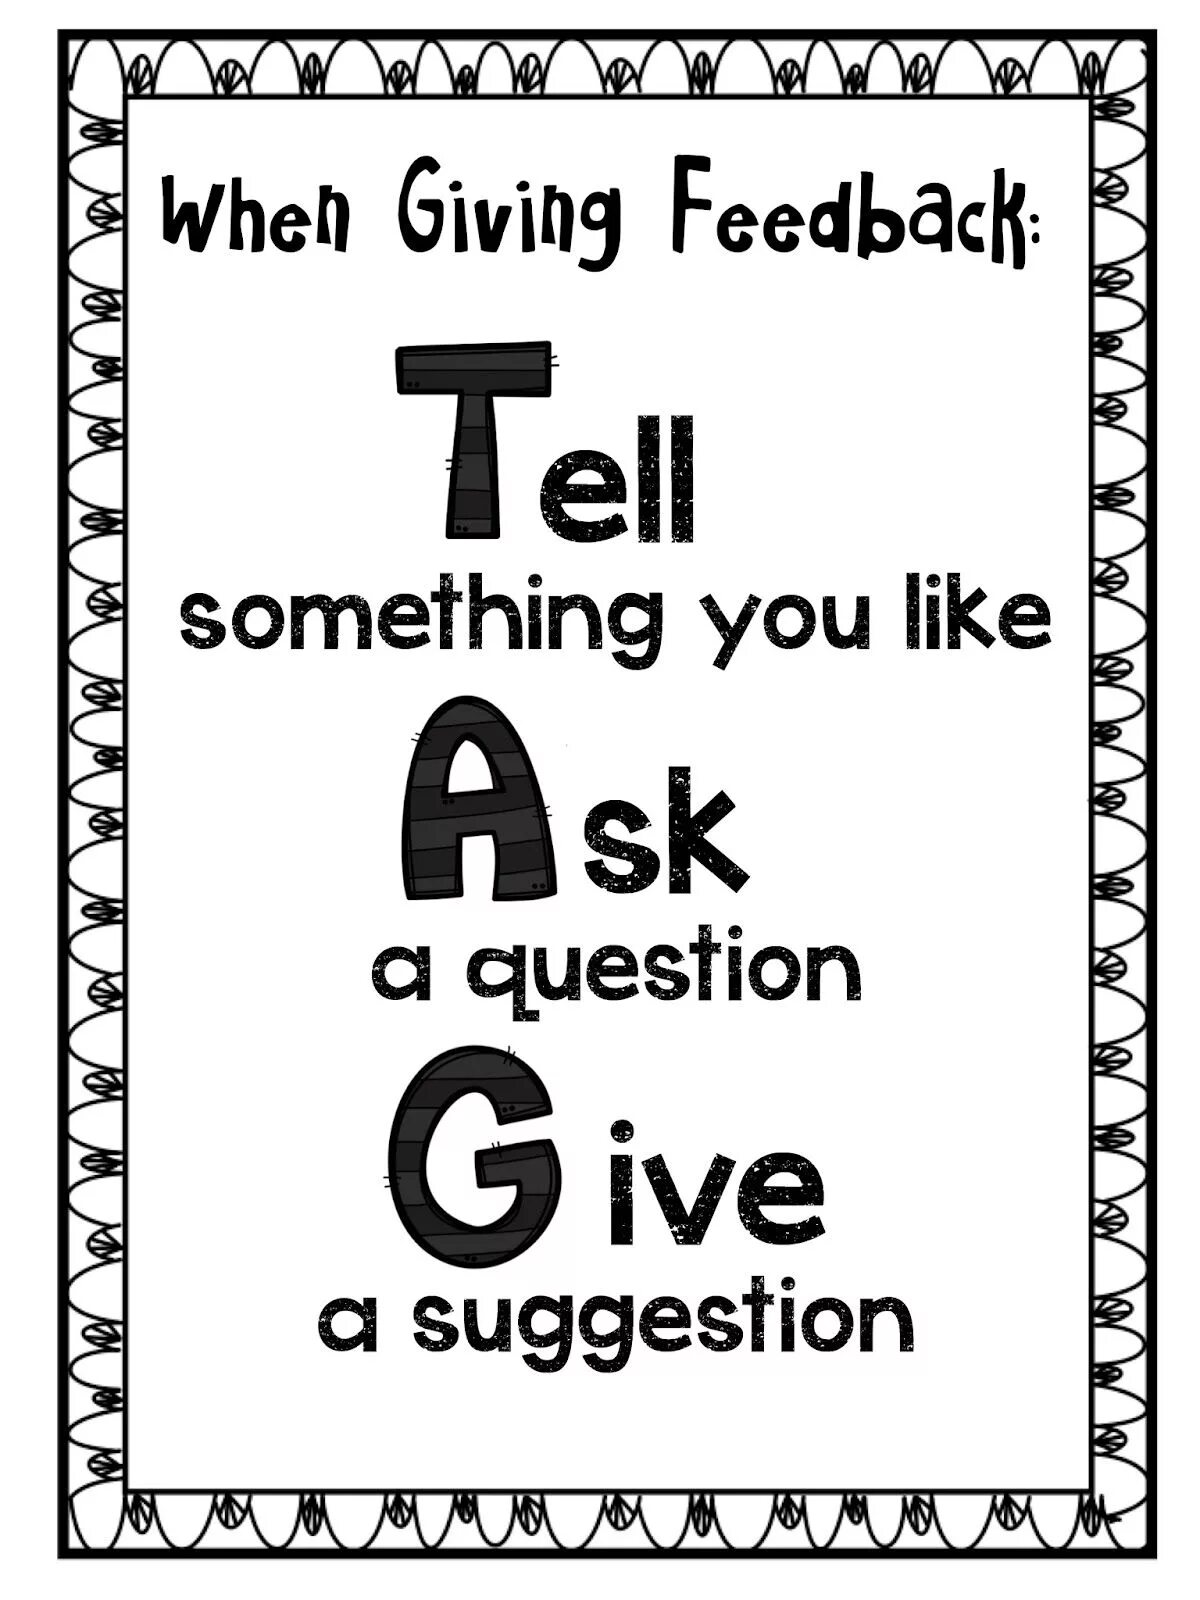 You can ask me you like. Giving feedback. Giving feedback to students. Giving feedback in the Classroom. To give feedback.